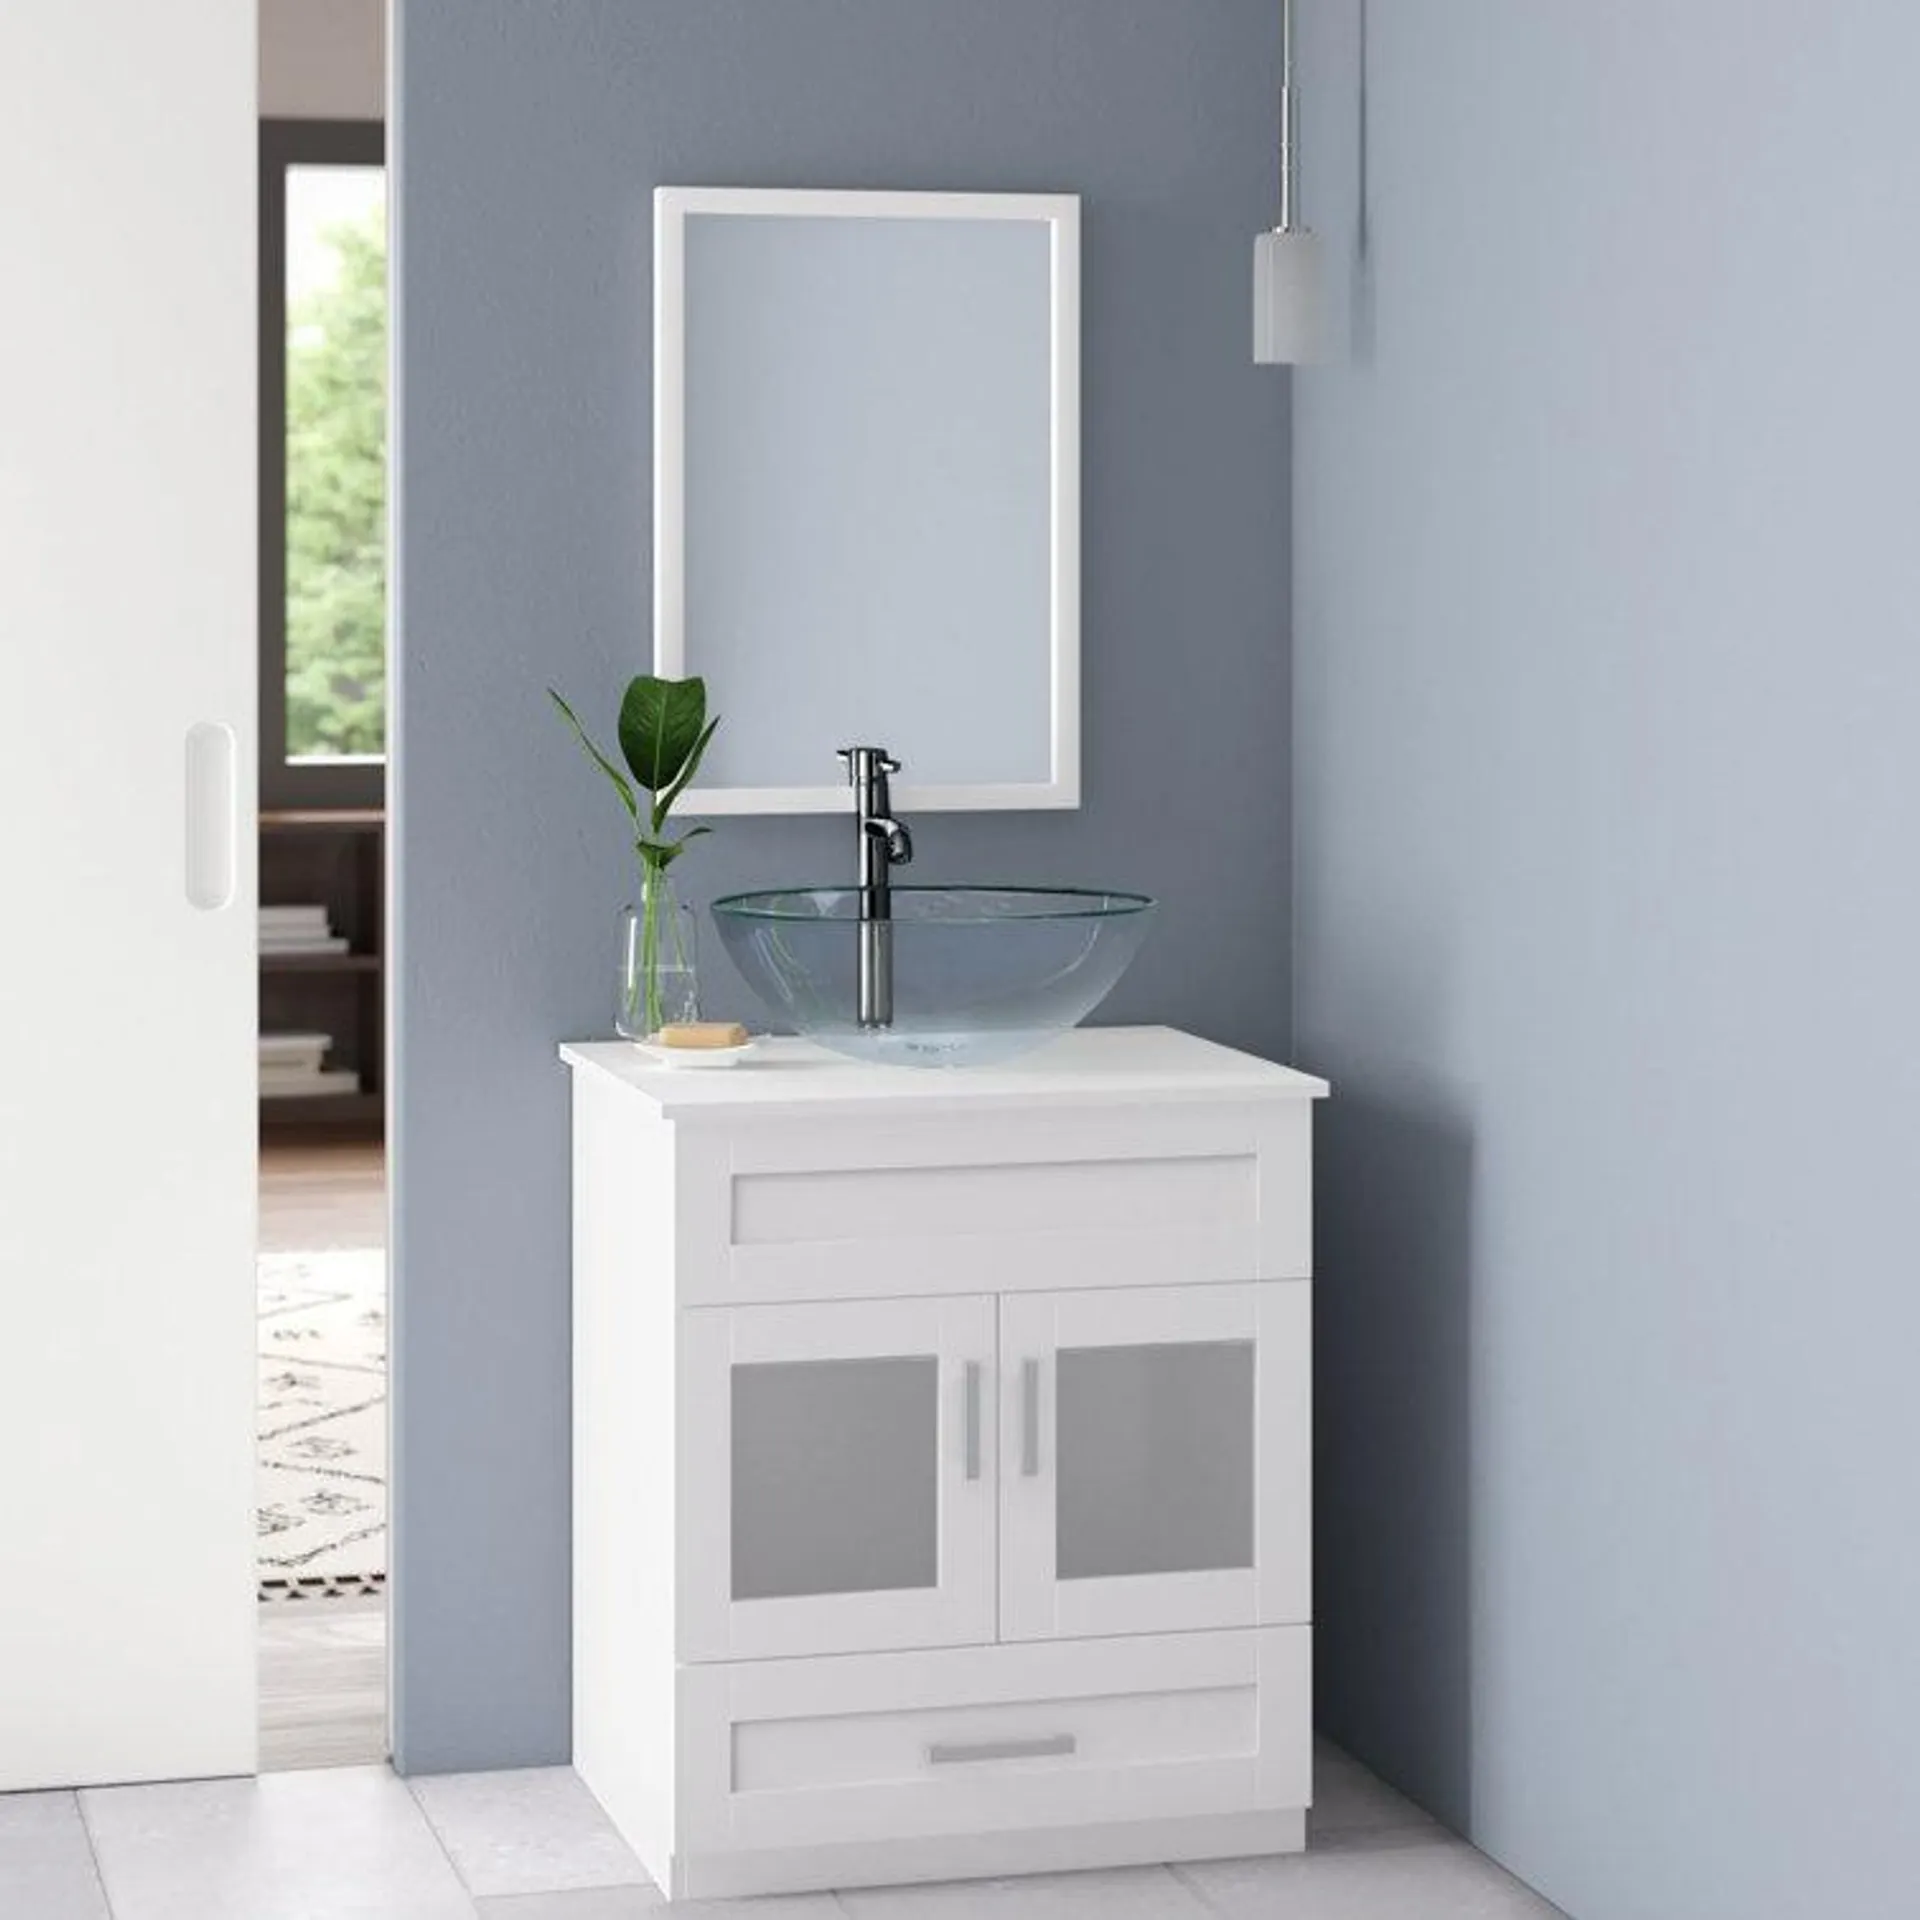 Hanshaw 24'' Free-standing Single Bathroom Vanity with Plastic Vanity Top